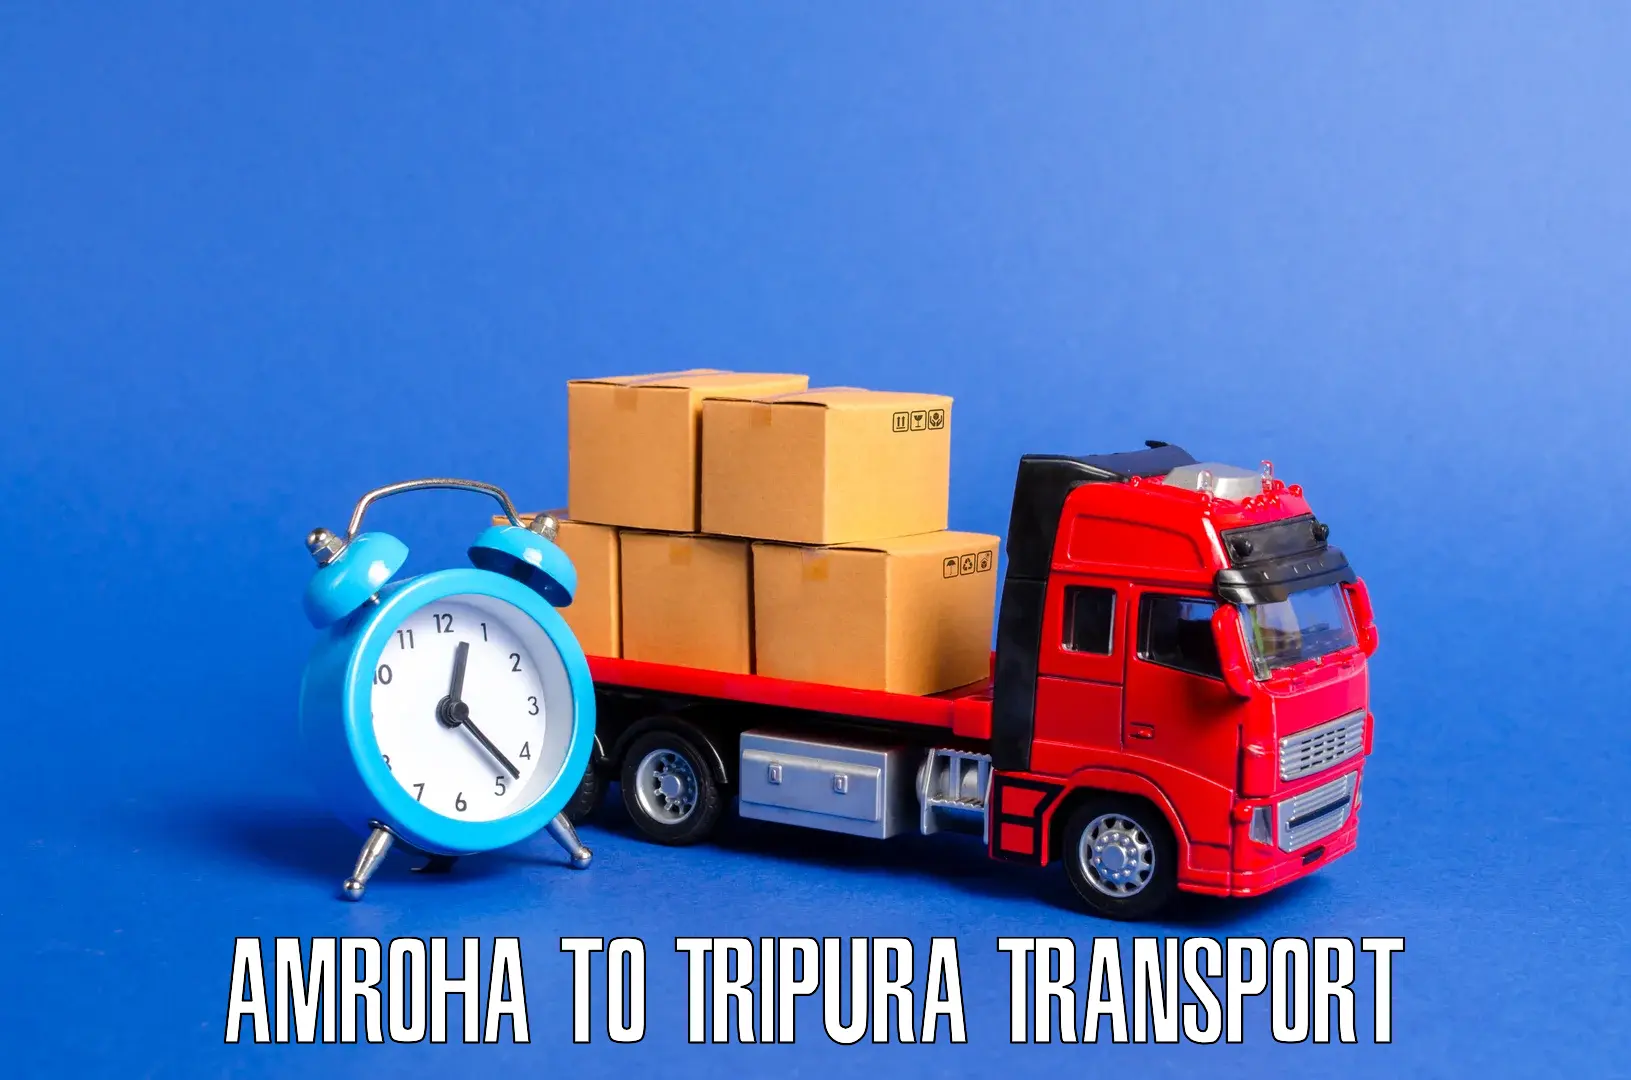 Transport in sharing Amroha to Udaipur Tripura